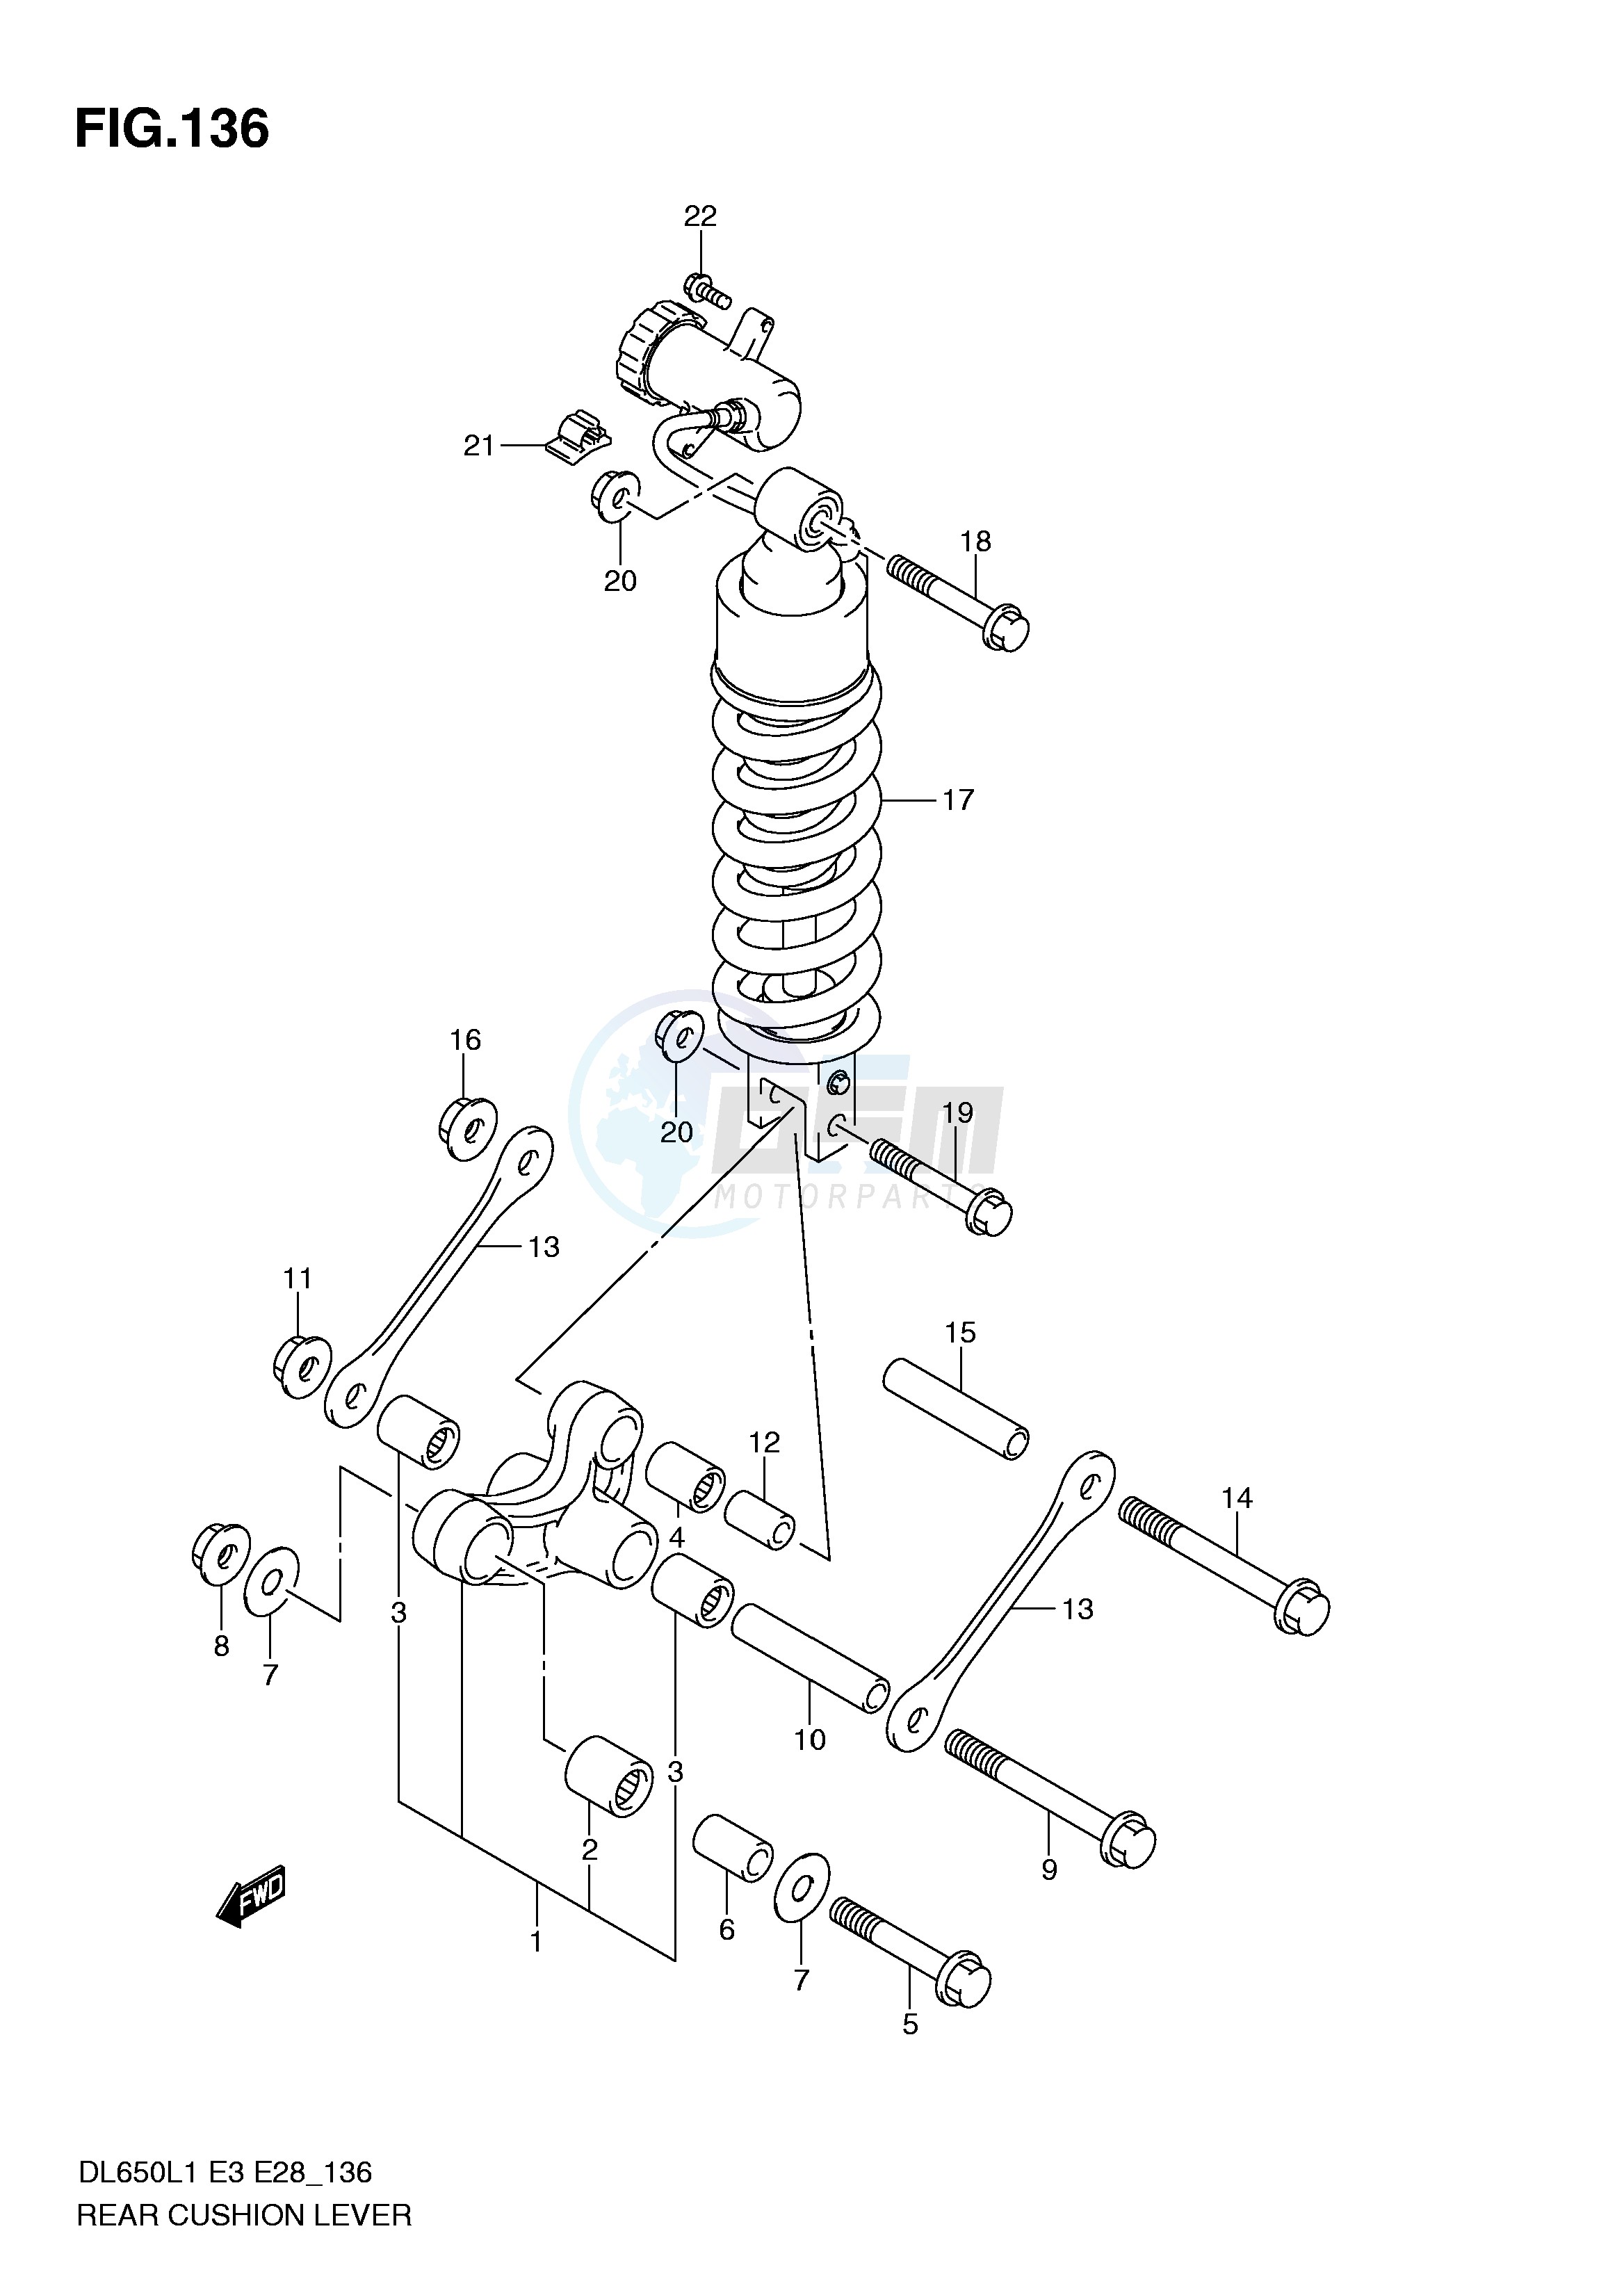 REAR CUSHION LEVER (DL650L1 E3) blueprint